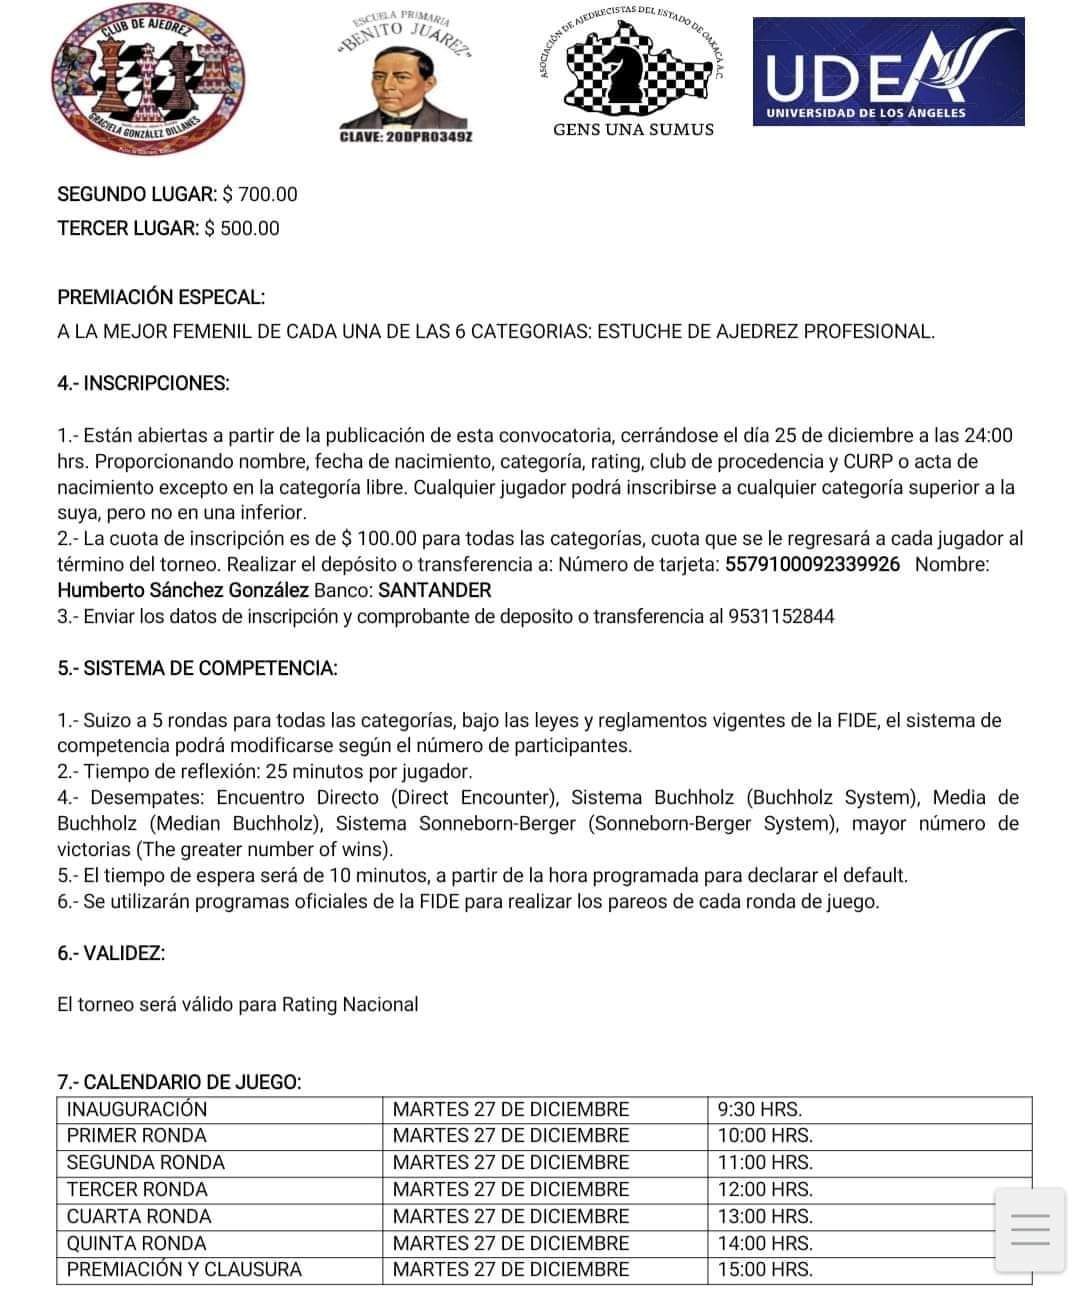 Convocatorio de  3er Torneo Abierto Graciela González Dillanes